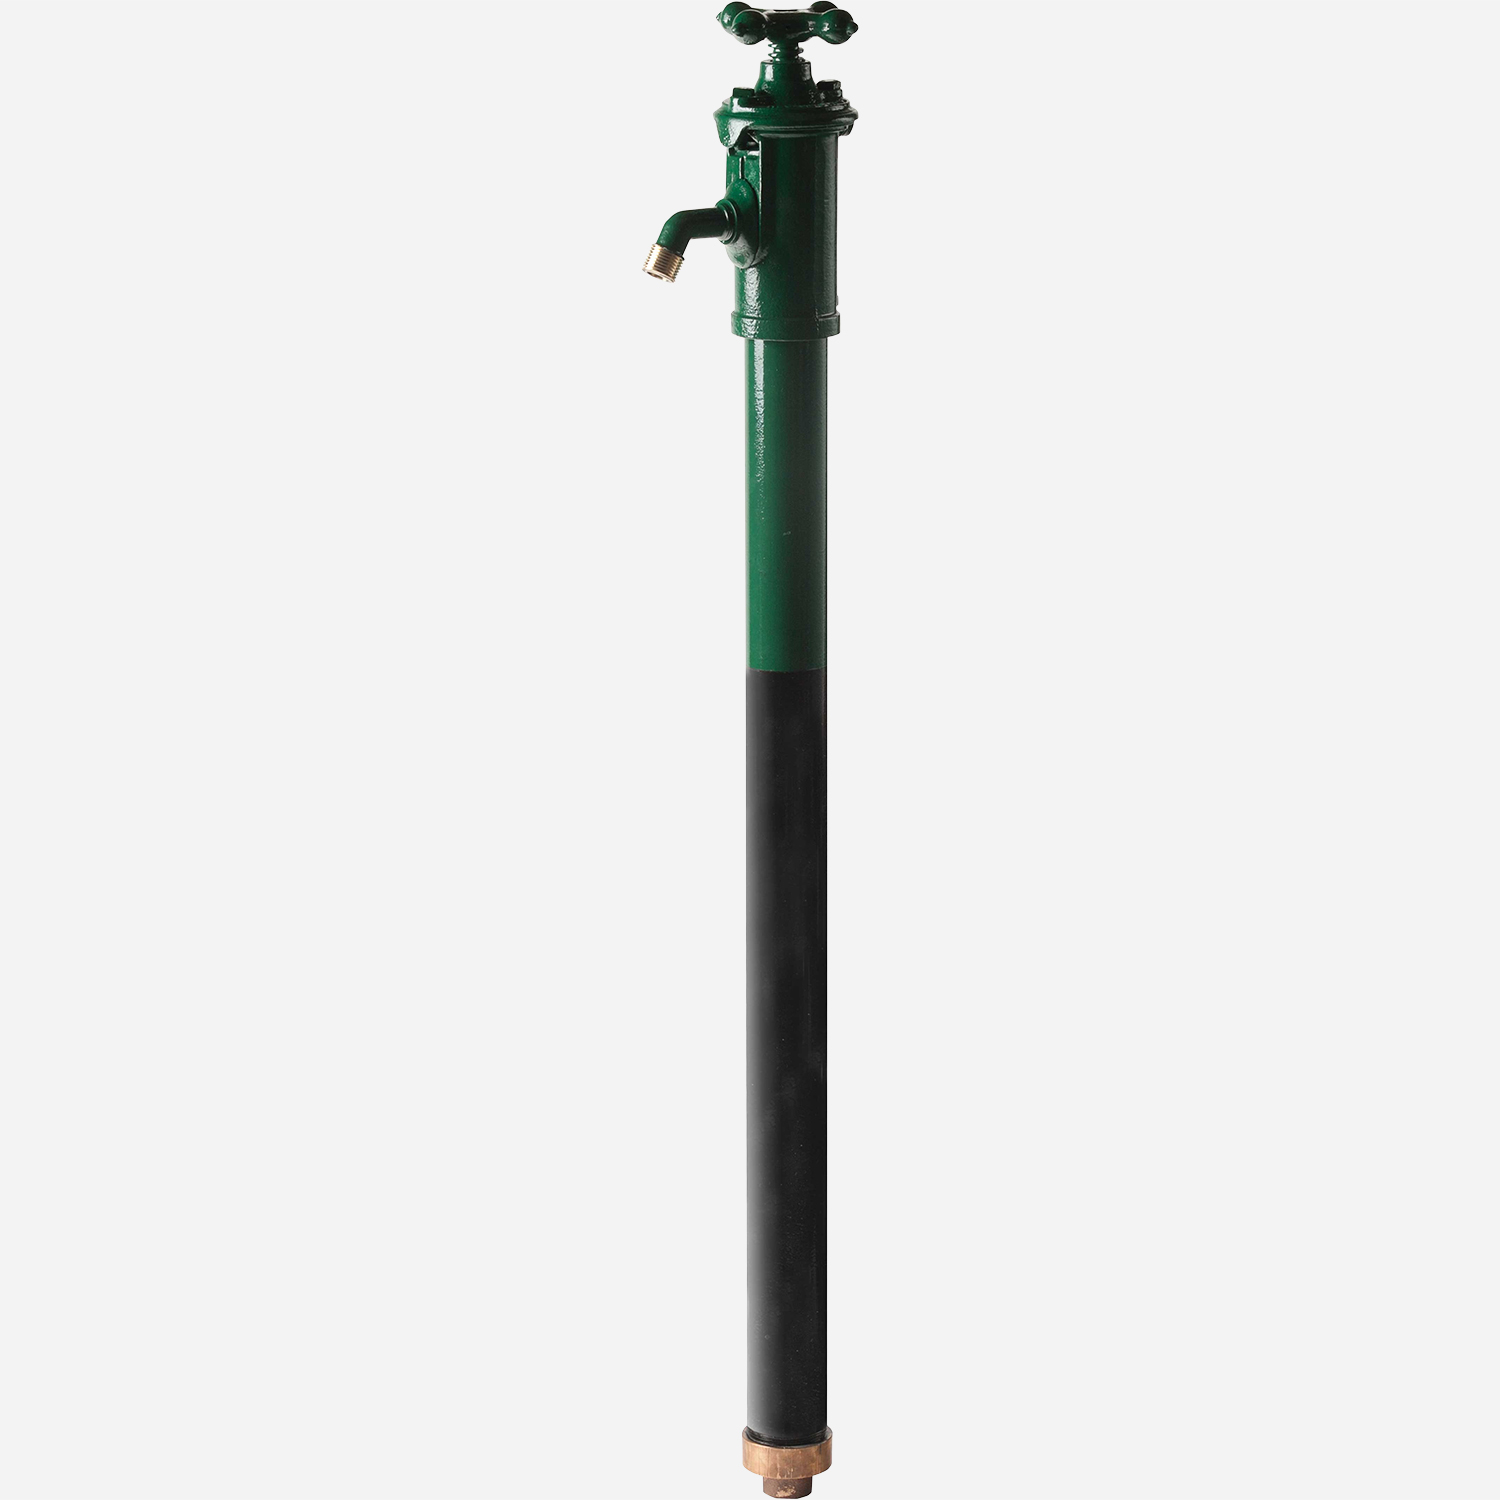 Hydrant Screw for Murdock M-100 1" Compression Hydrant 100-2 67004111 *FREE SHIP 